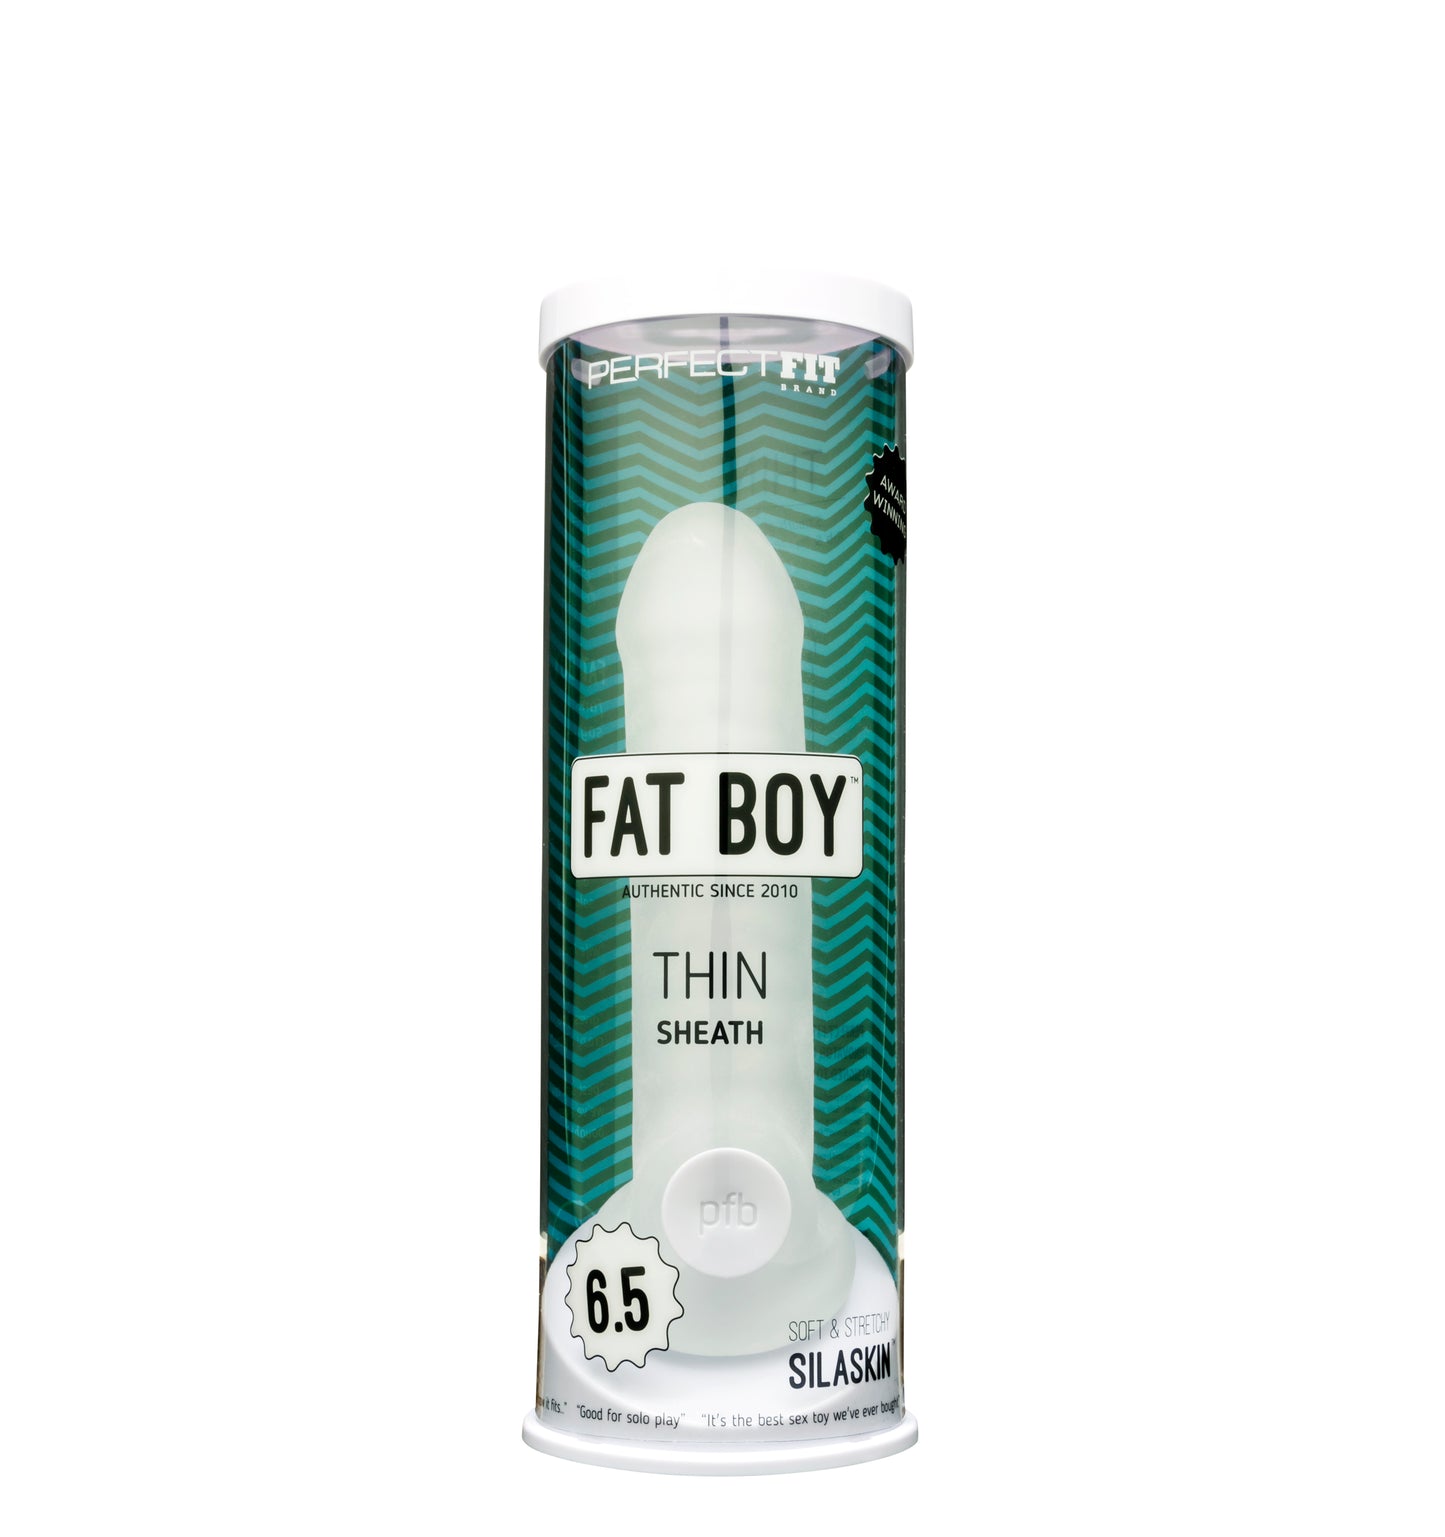 Fat Boy Thin Sheath 6.5 - Just for you desires